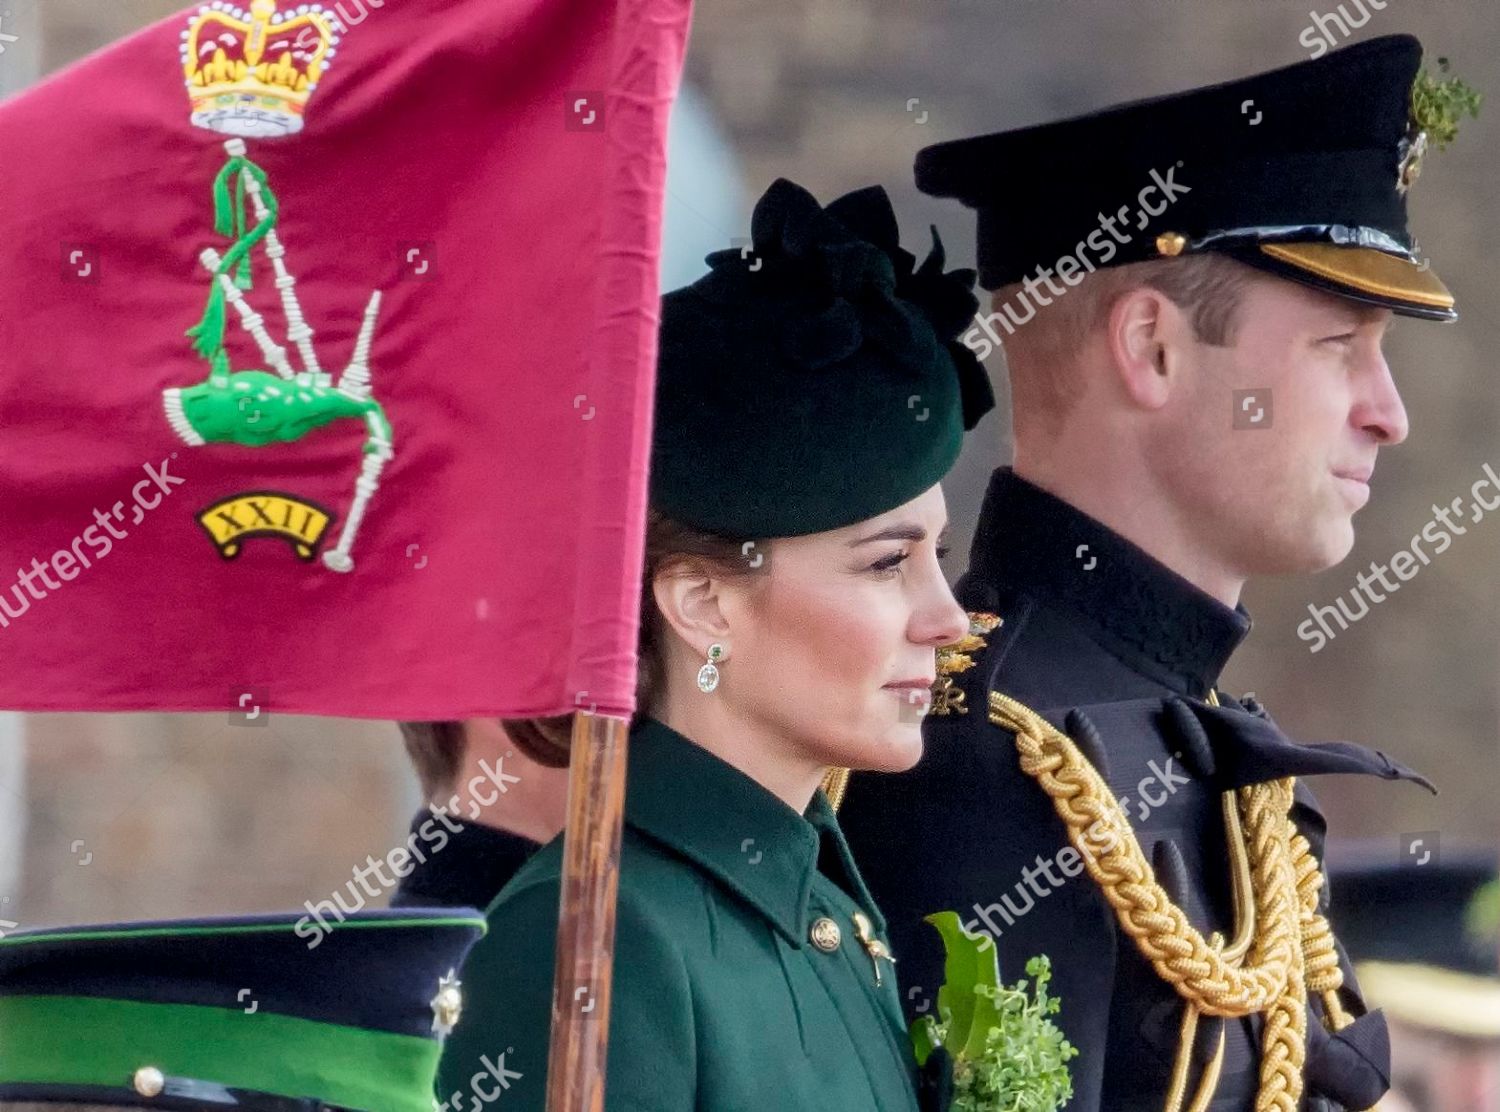 prince-william-and-catherine-duchess-of-cambridge-attend-st-patricks-day-parade-cavalry-barracks-hounslow-london-uk-shutterstock-editorial-10158453ab.jpg